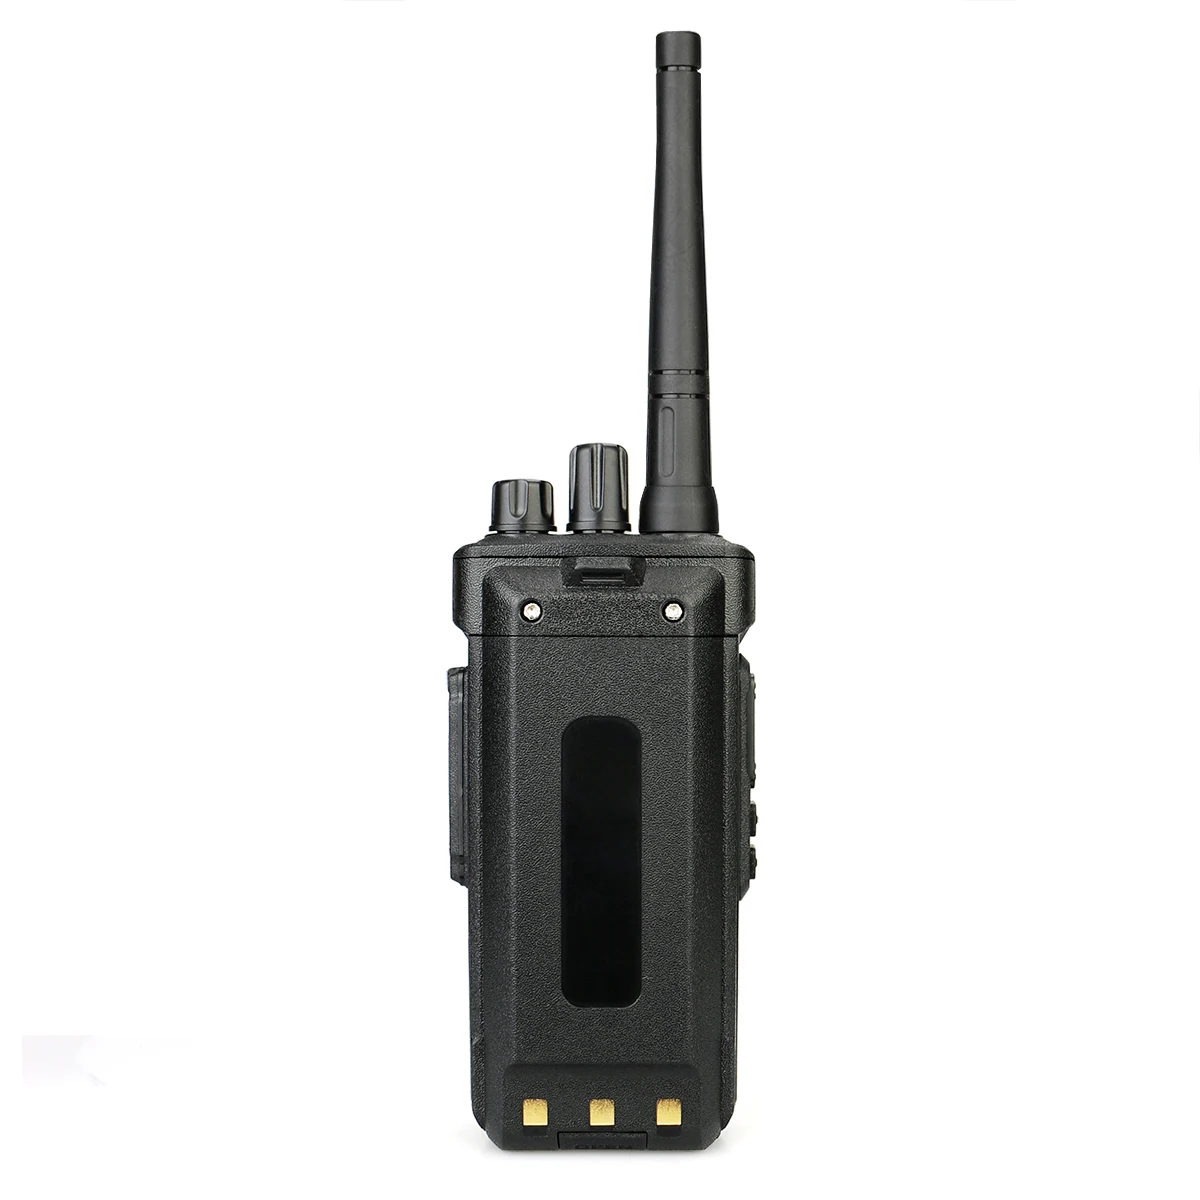 Wholesale RETEVIS RT48 IP67 Waterproof FRS Walkie Talkie 2W UHF  License-free Handheld Two Way Ham Radio Transceiver VOX Scrambler USB From 